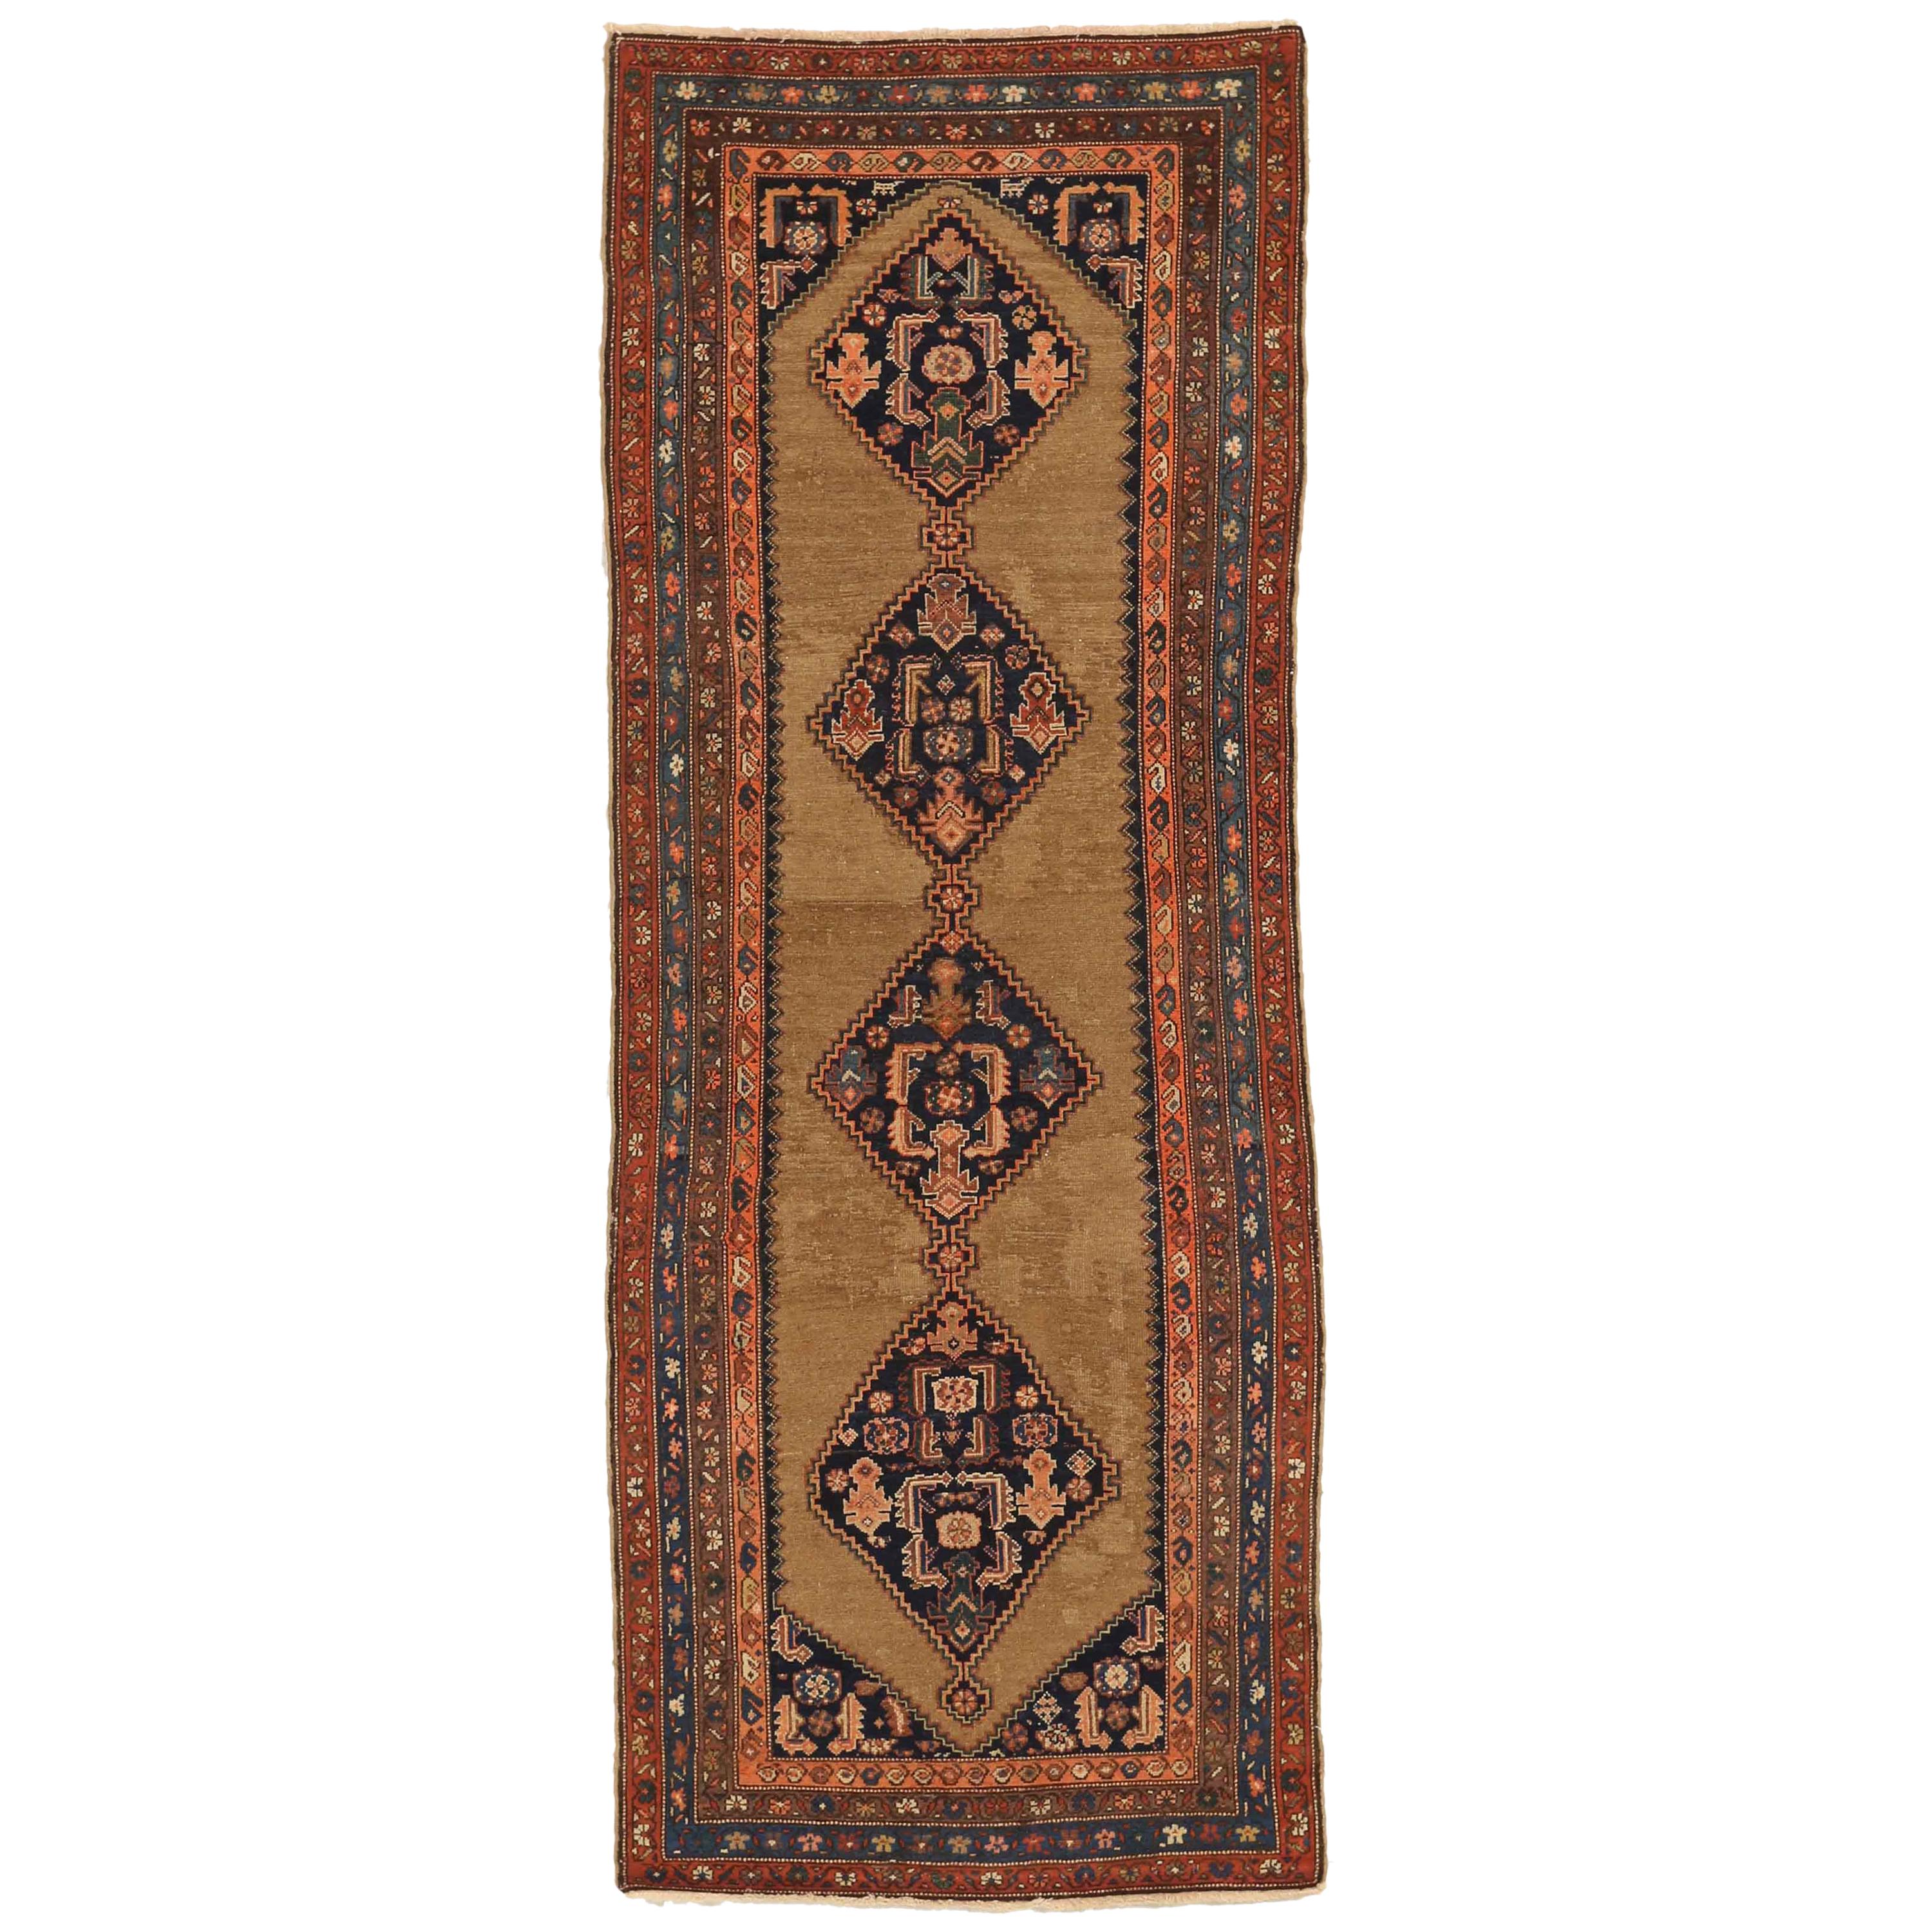 Antique Persian Rug Malayer Design with Fine Geometric Patterns, circa 1920s